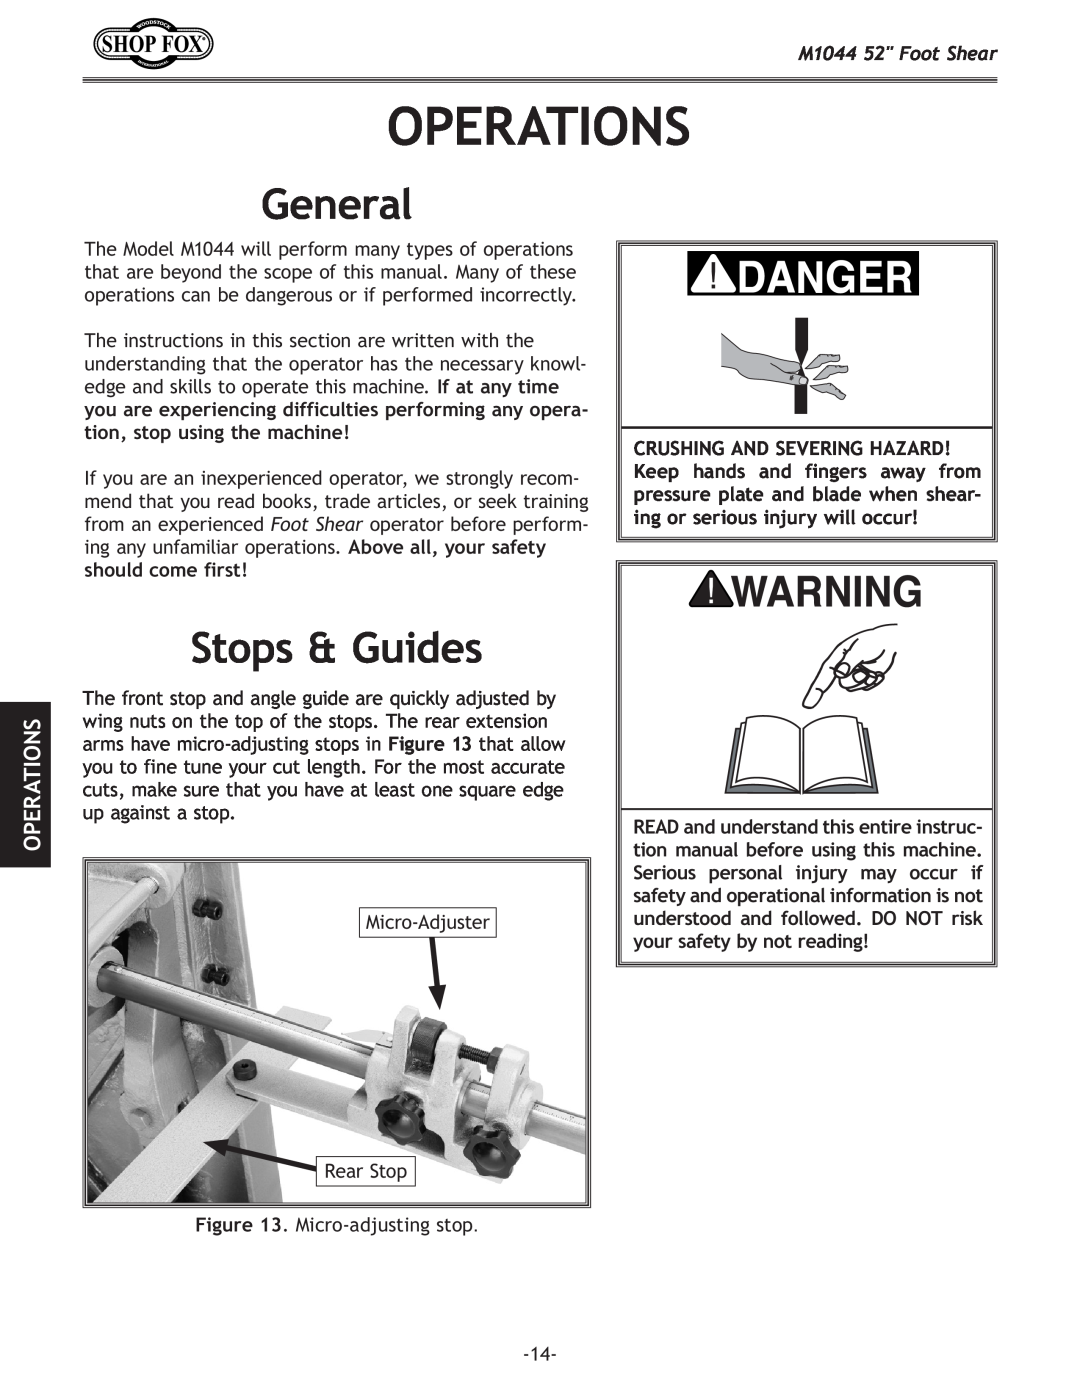 Woodstock manual Operations, General, Stops & Guides, M1044 52 Foot Shear 